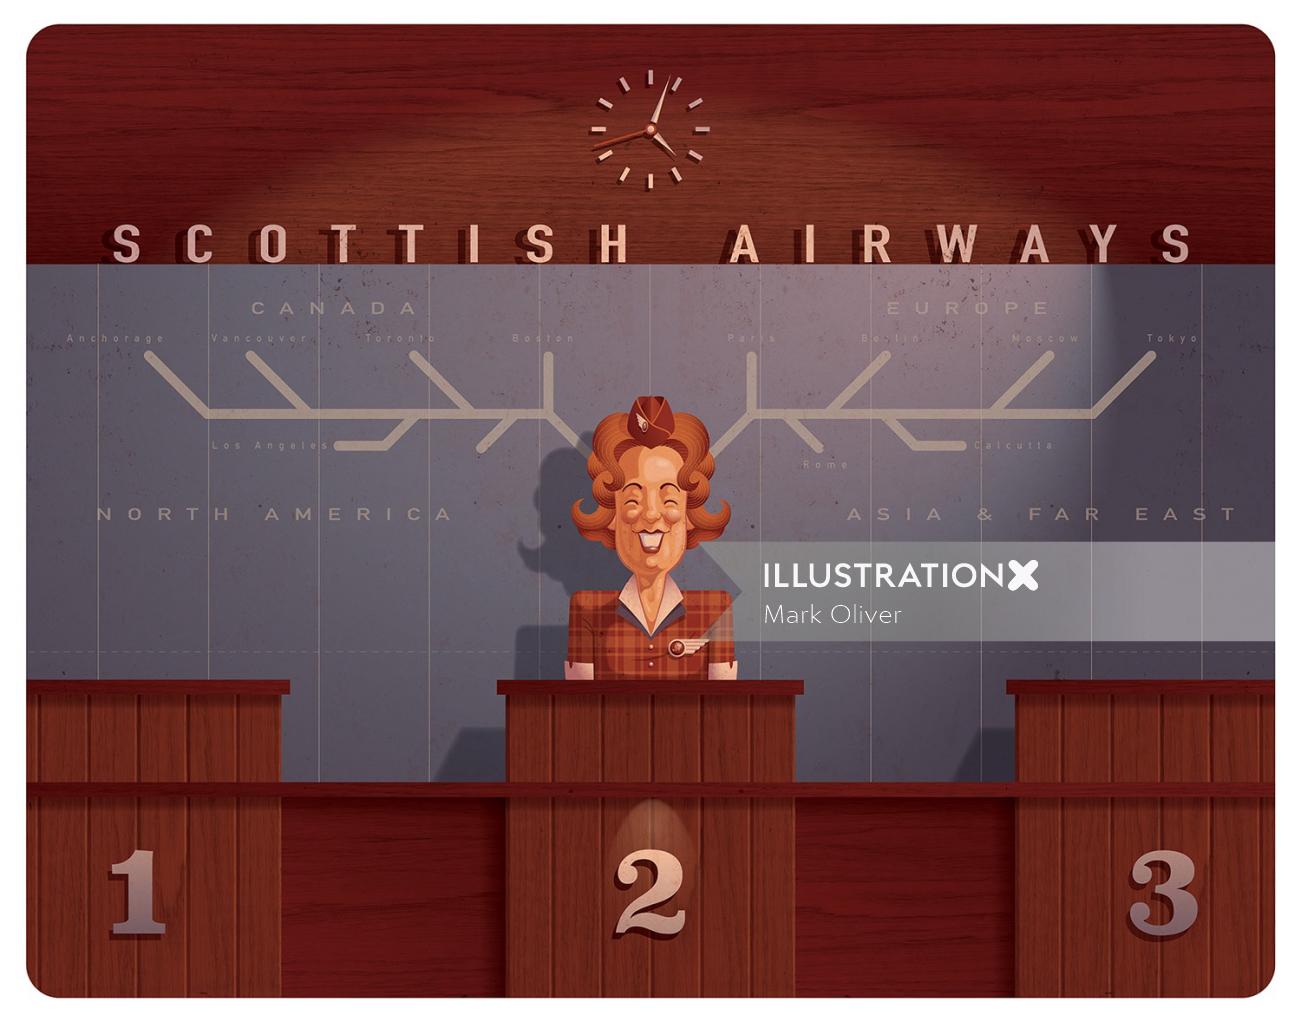 vias aéreas escocesas ilustradas por Mark Oliver